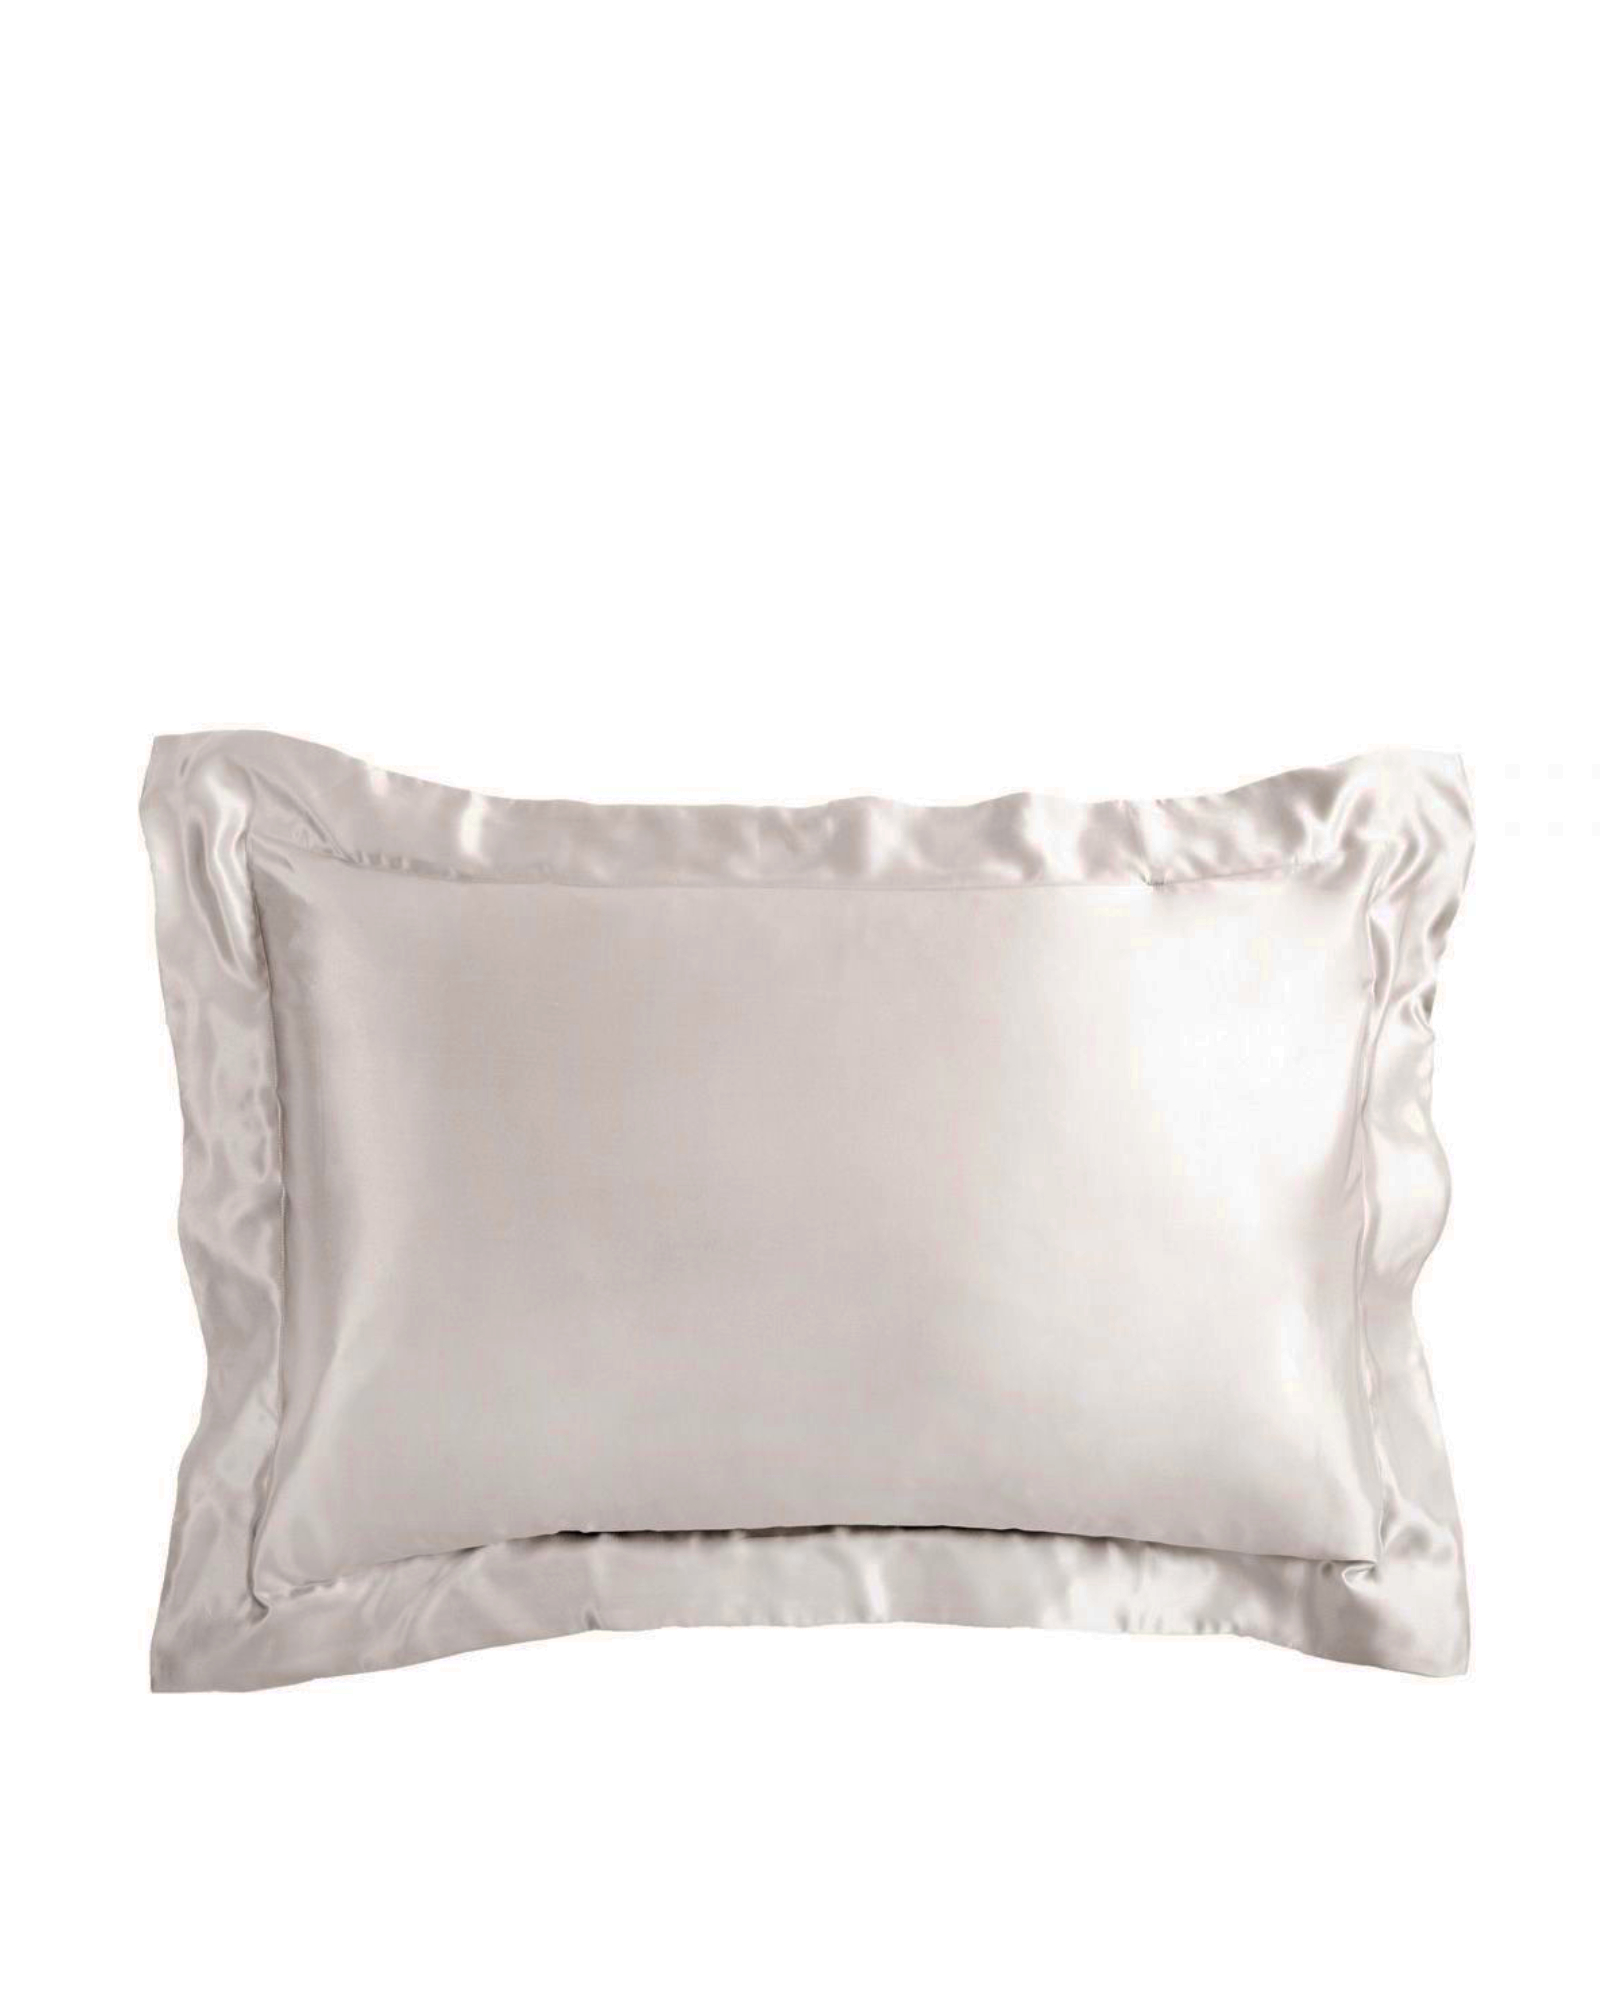 Gingerlily - Pillowcase SILK nude - 50x75 cm - nude